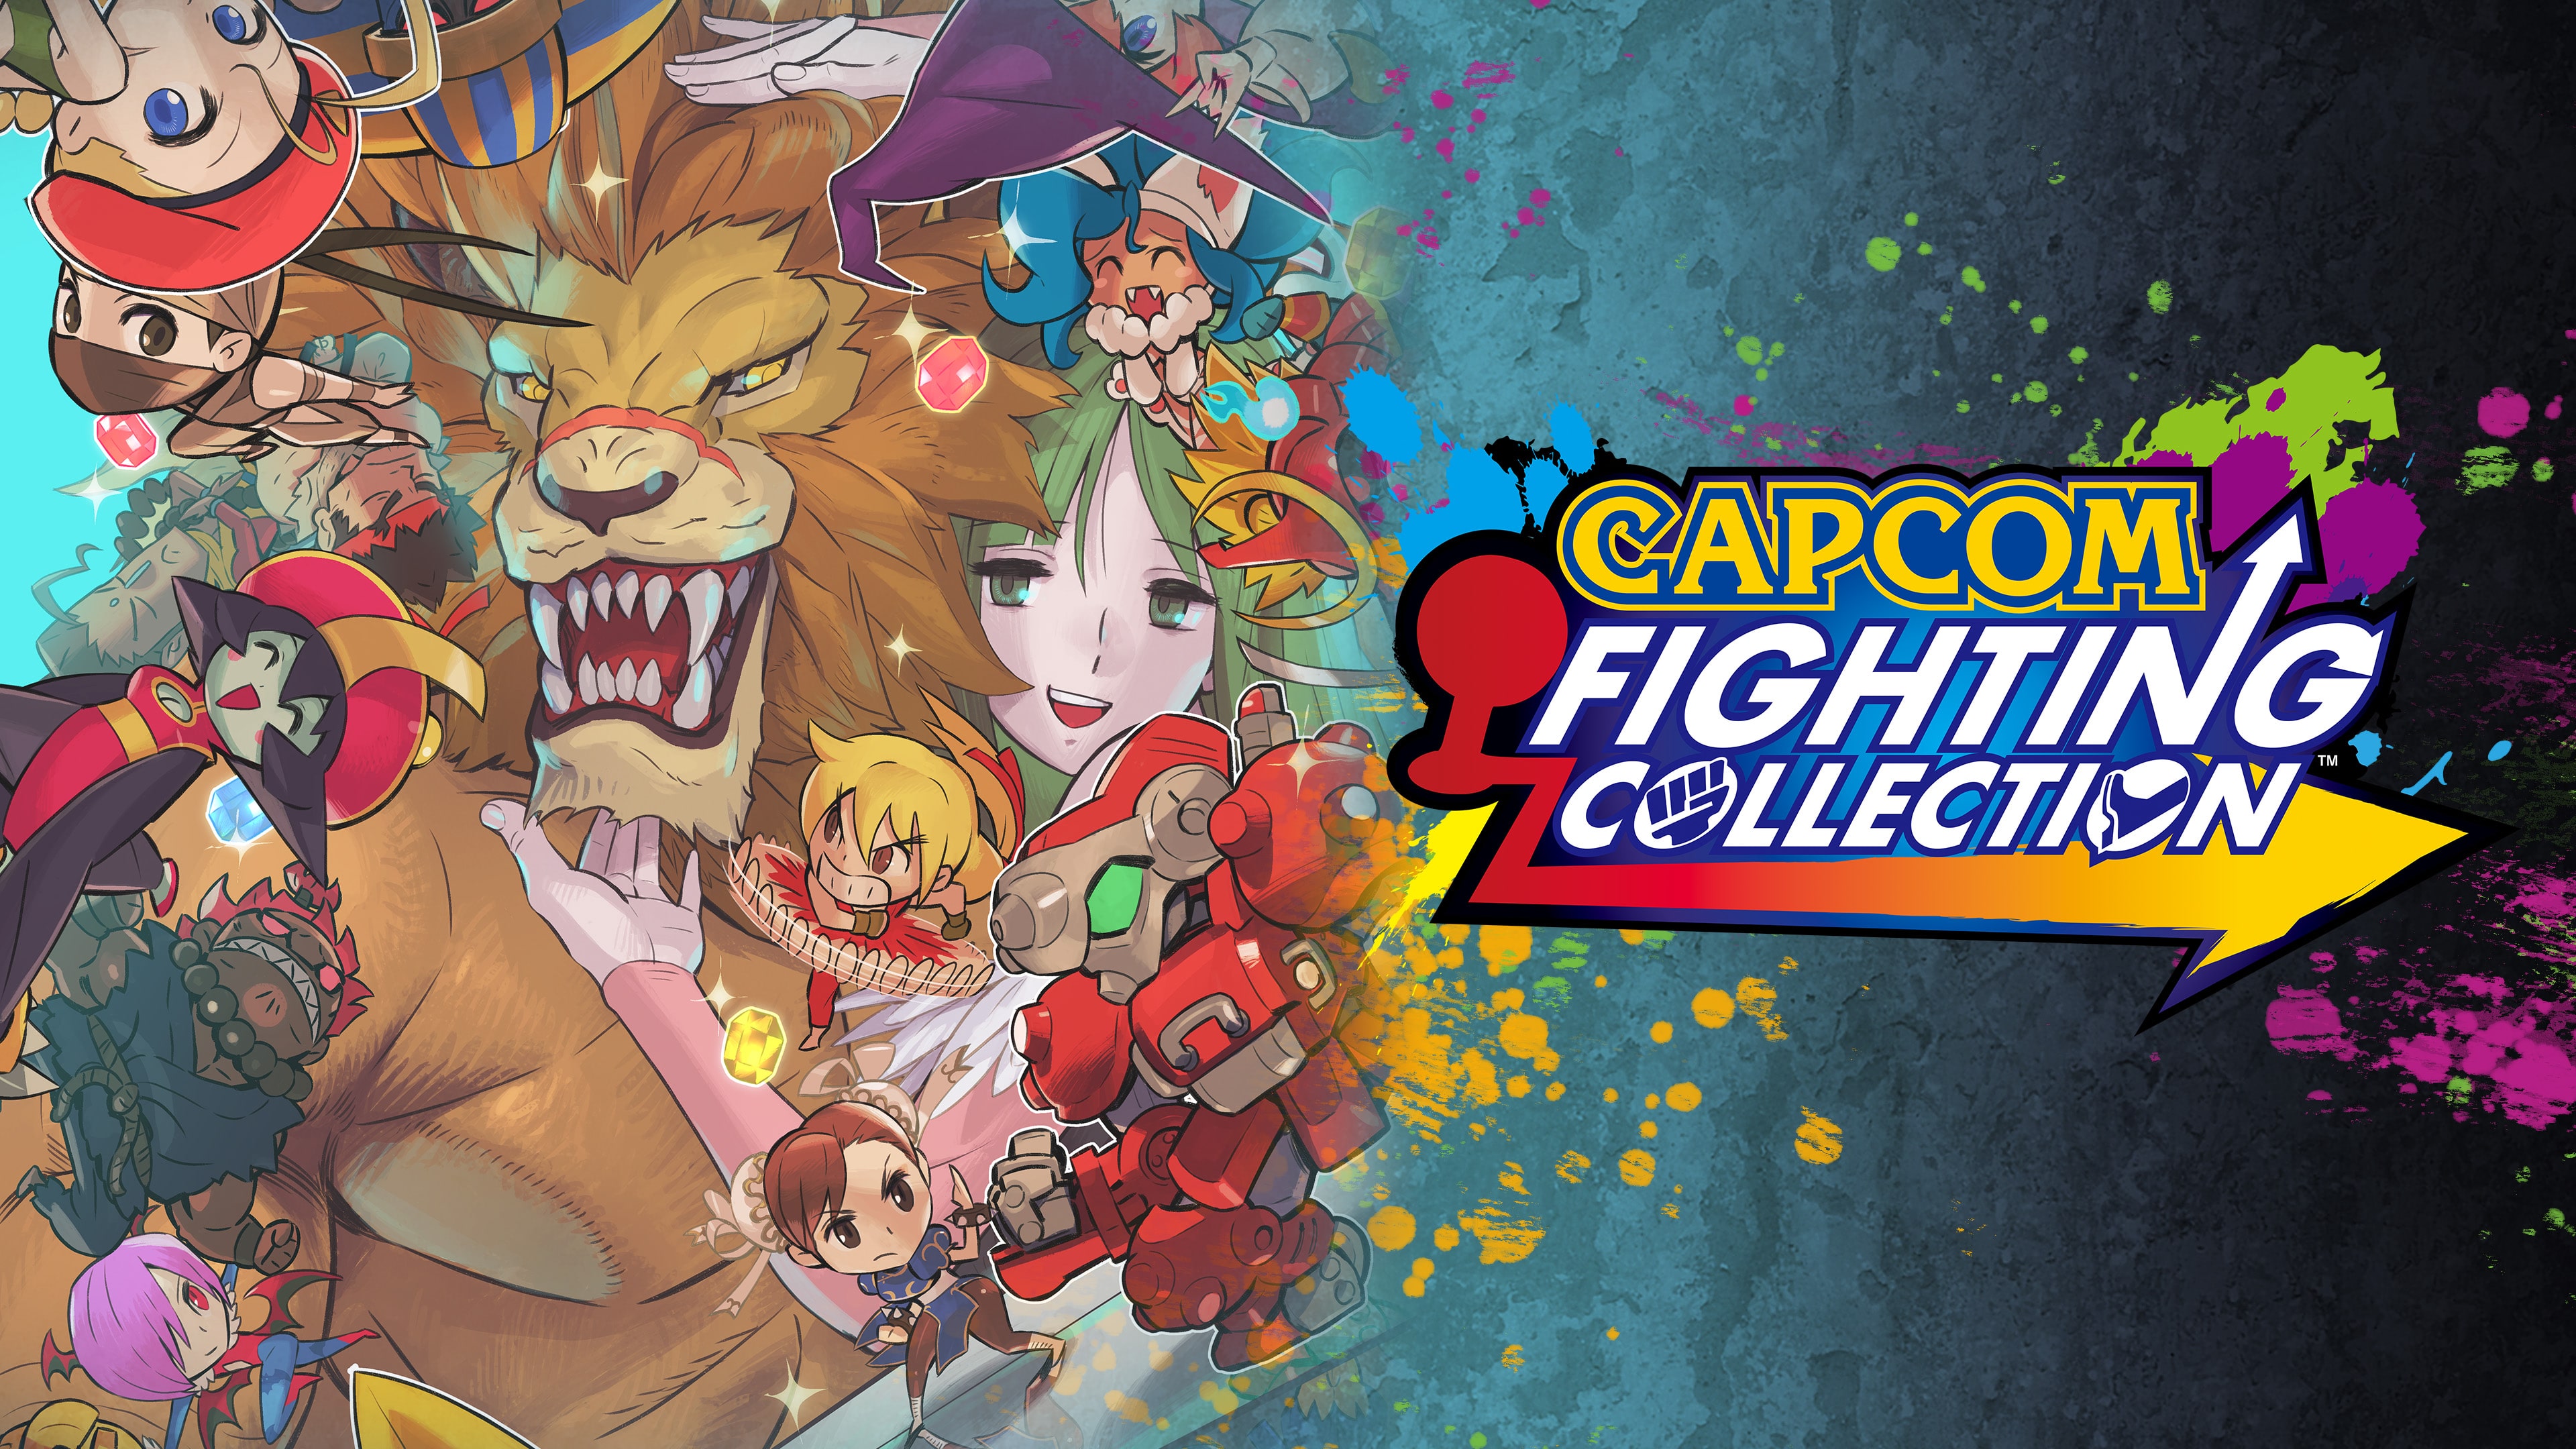 Capcom Fighting Collection (日语, 韩语, 简体中文, 繁体中文, 英语)